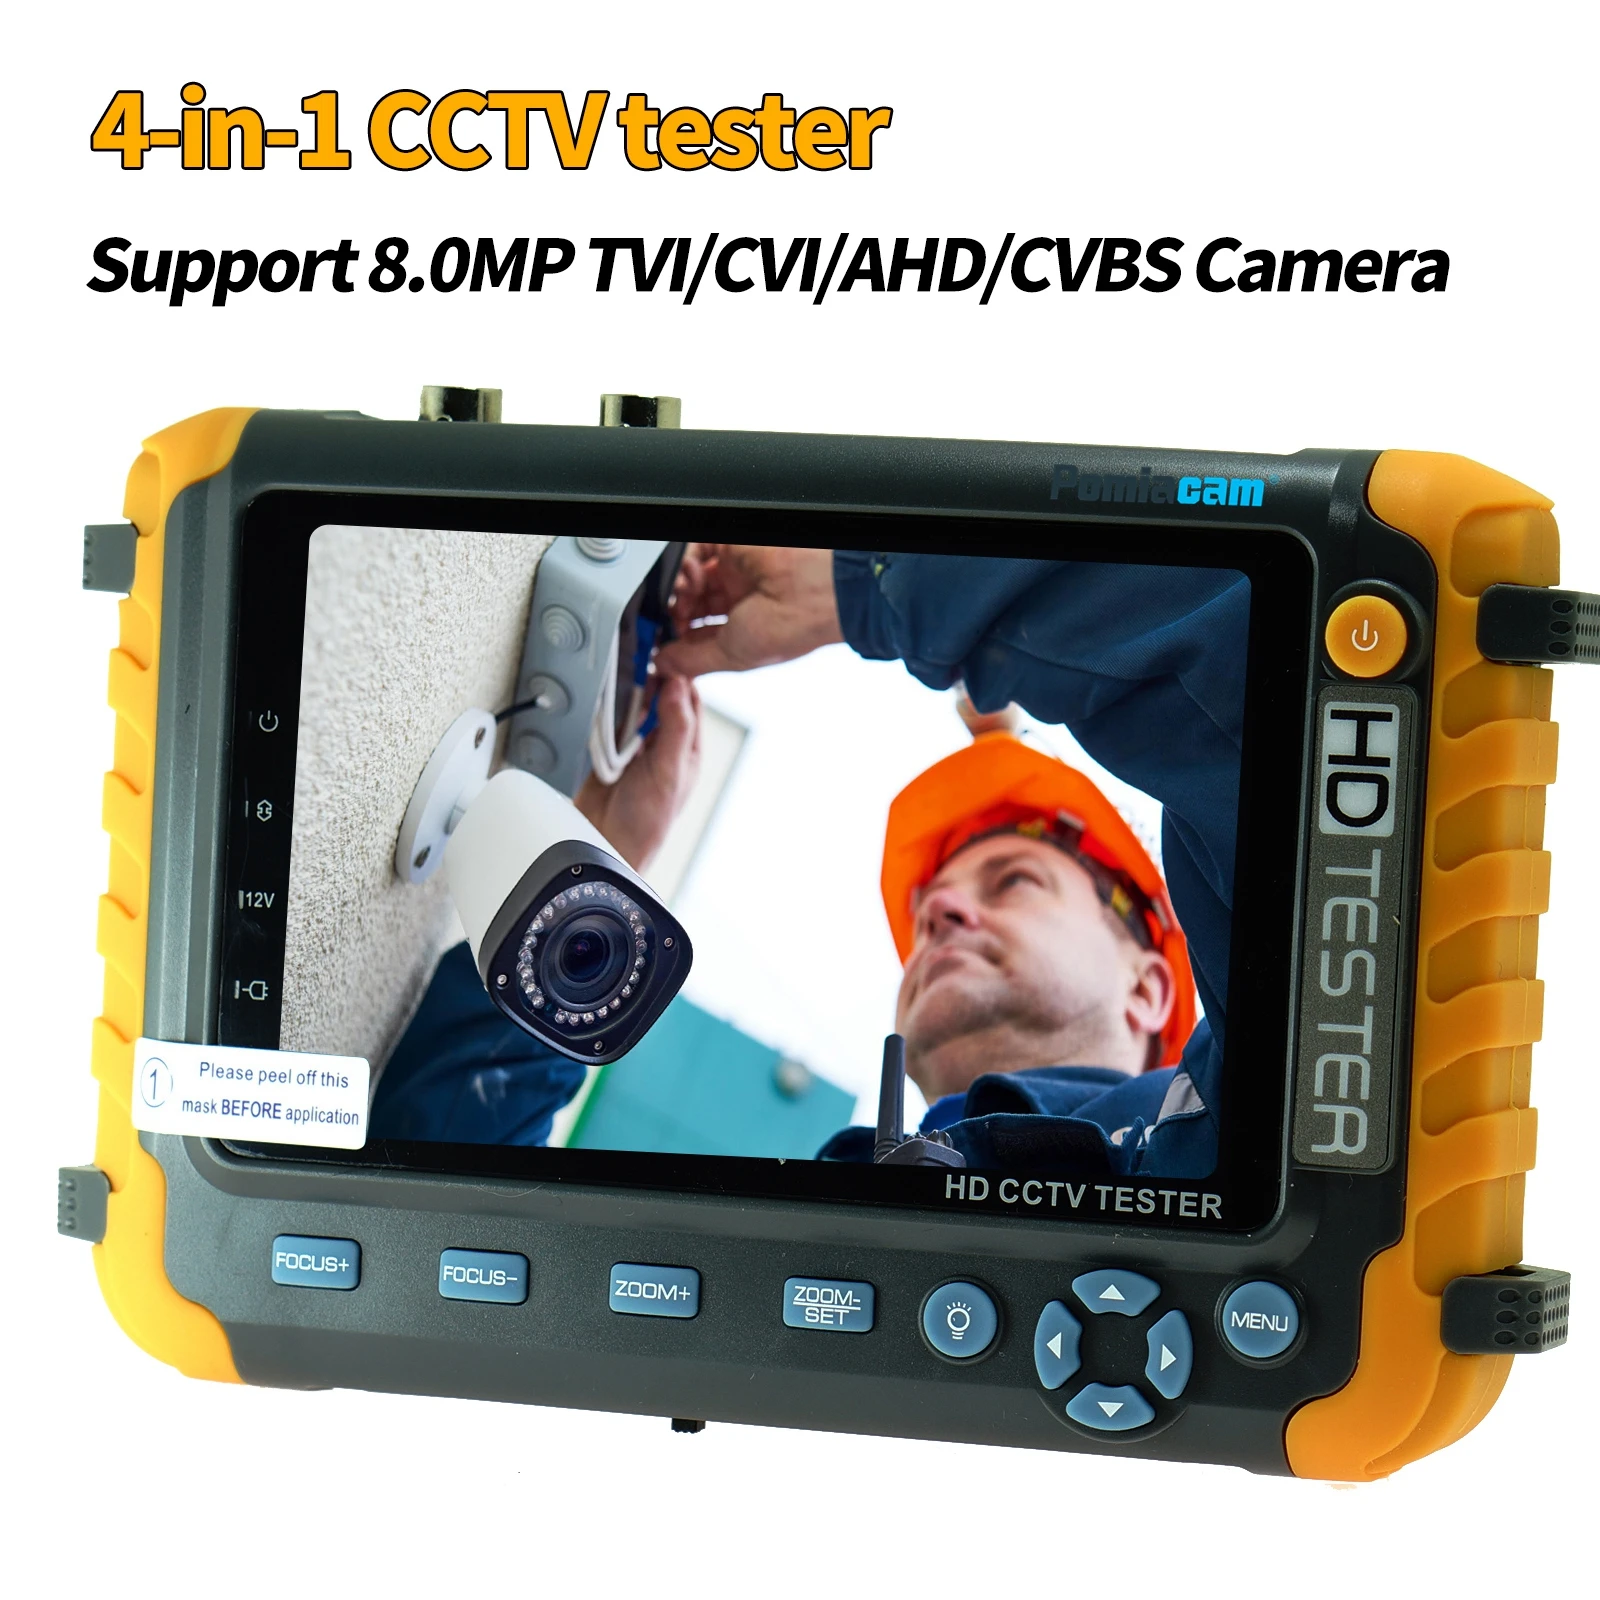 Cctv tester for security camera installation monitor, Support 8MP AHD TVI CVI CVBS Coaxial camera monitor .960 CVBS cctv Analog